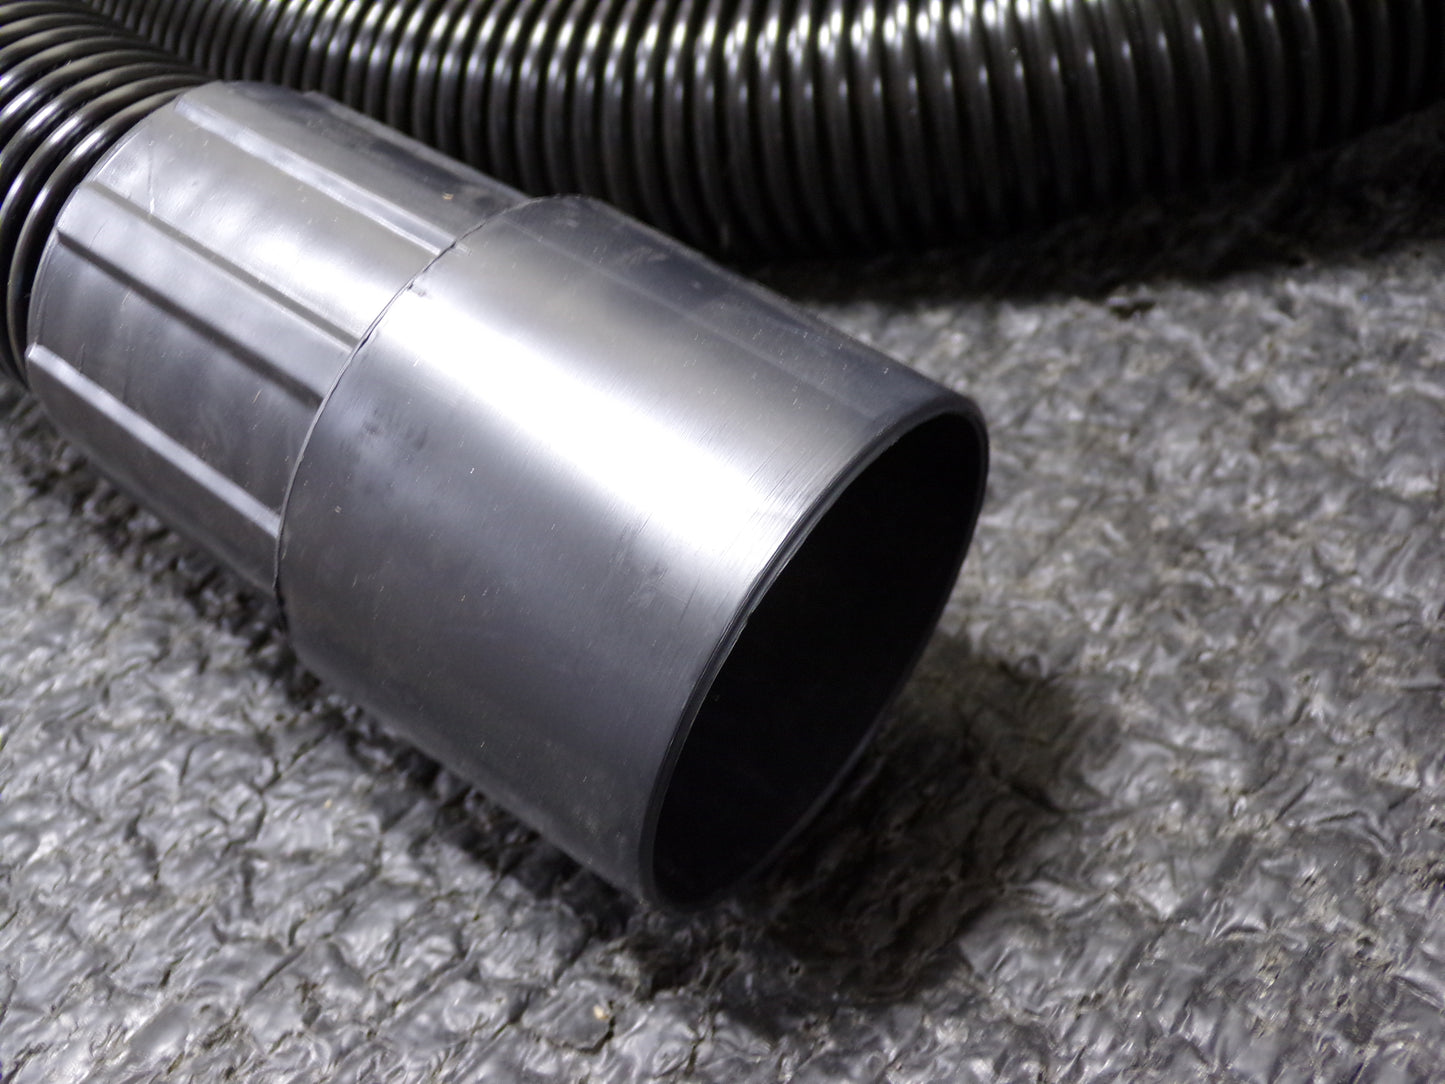 DAYTON Crush-Resistant Vacuum Hose, 1 1/2 in Hose Dia., 25 ft Hose Length, Plastic, Black (CR00348-BT10)